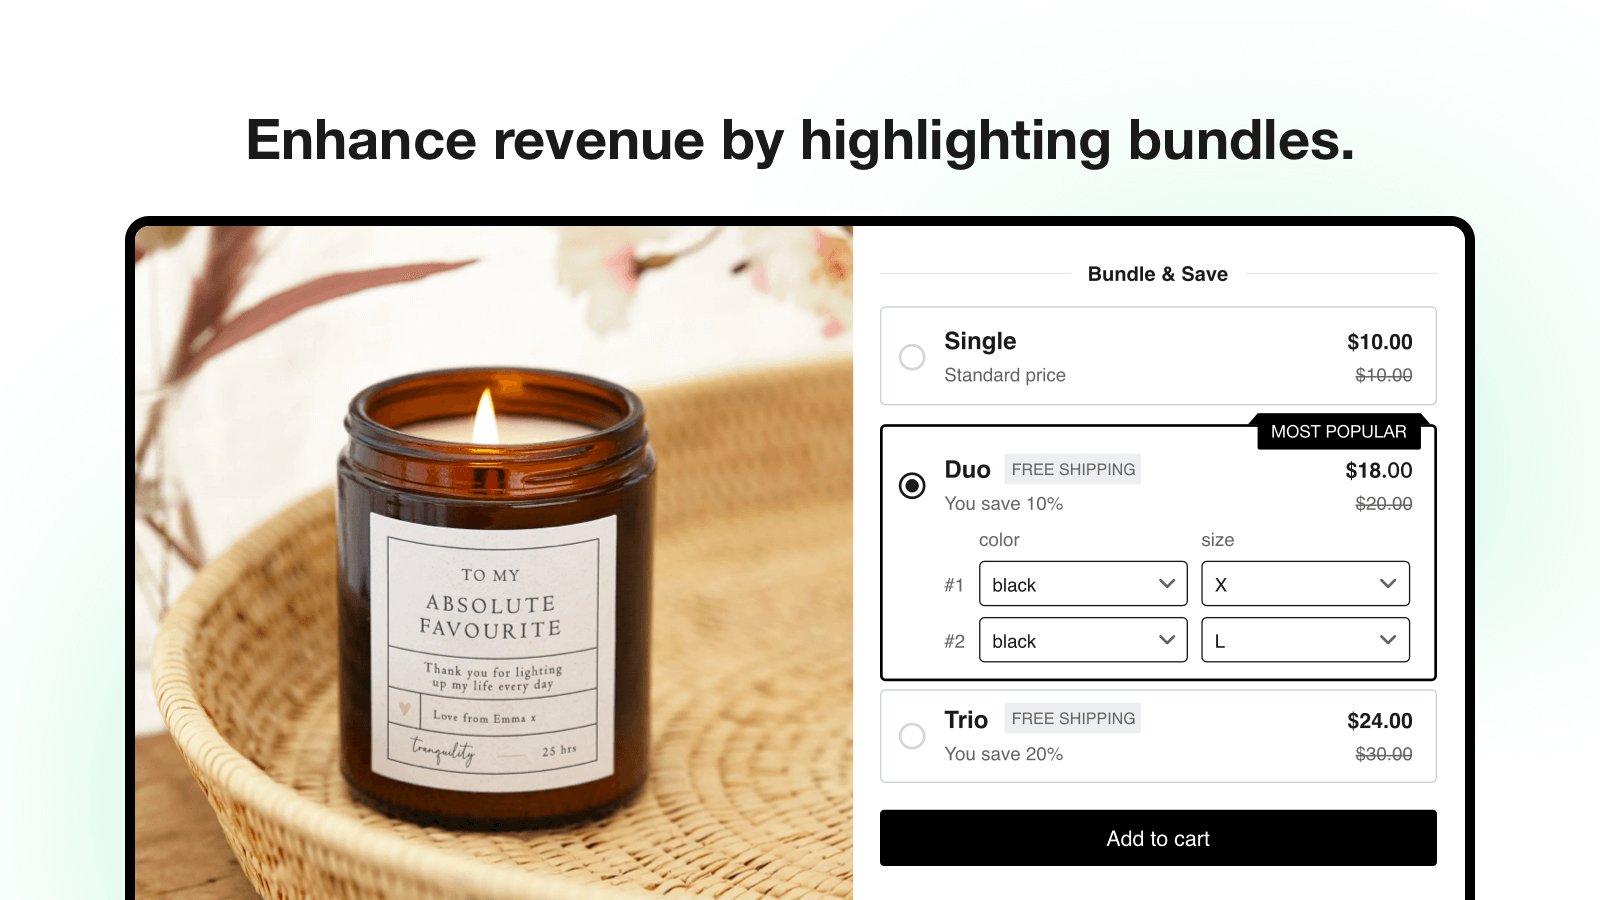 Enhance revenue by highlighting bundles.